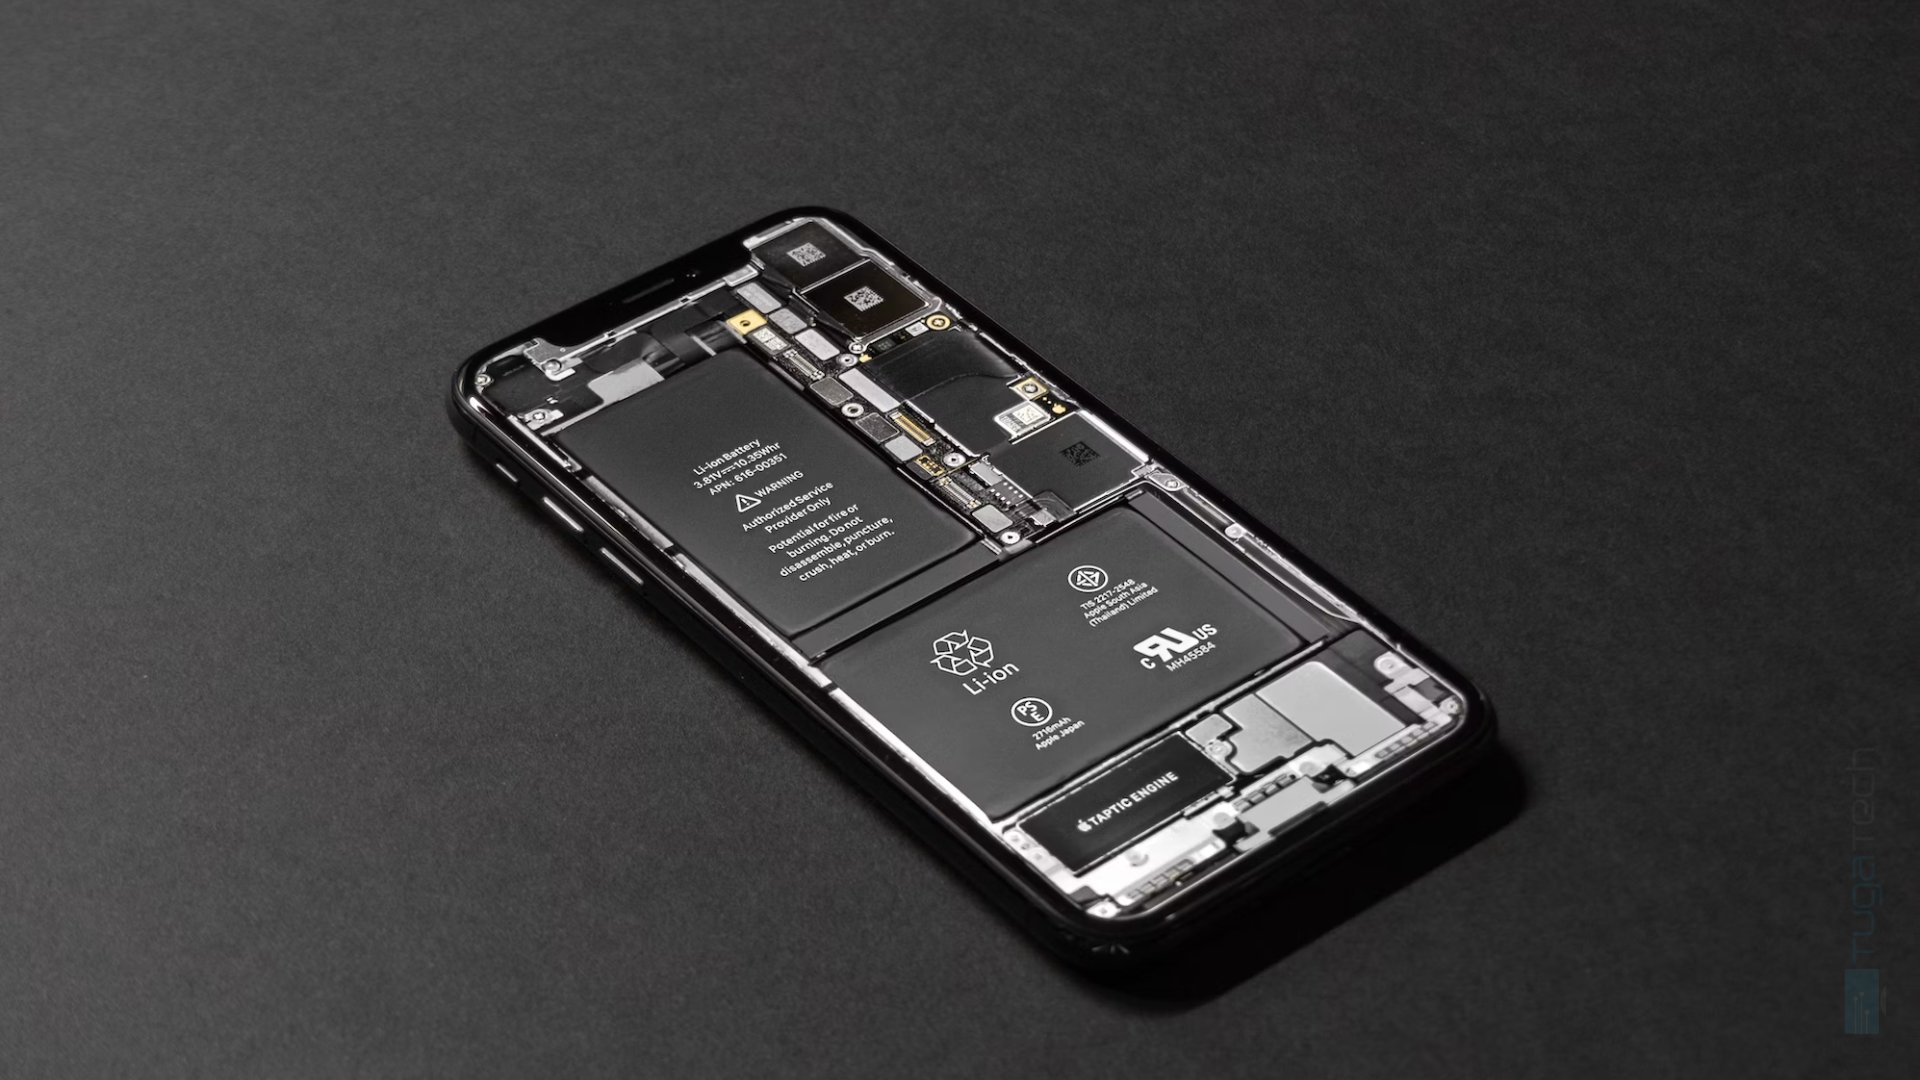 Apple bateria no interior de iPhone